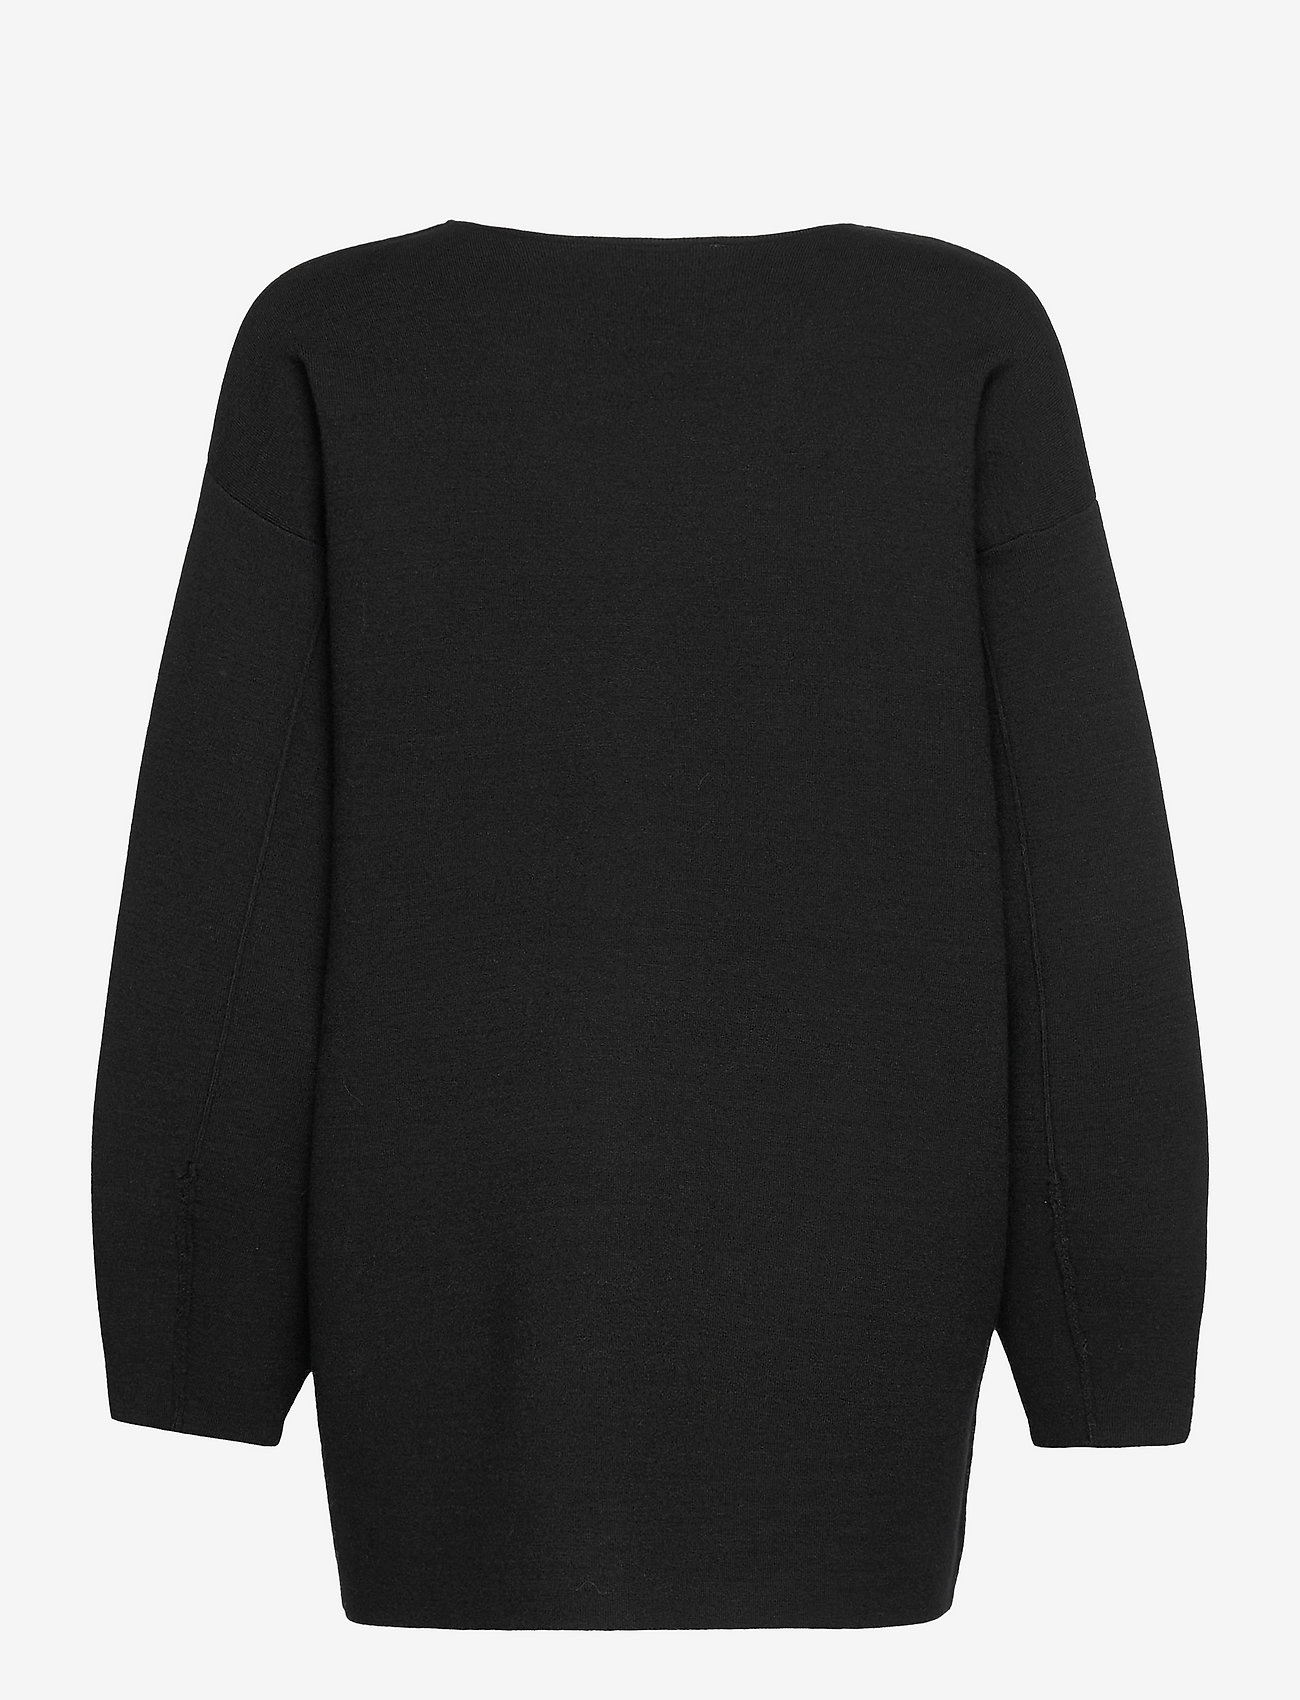 Gestuz - TalliGZ V-pullover - swetry - black - 1